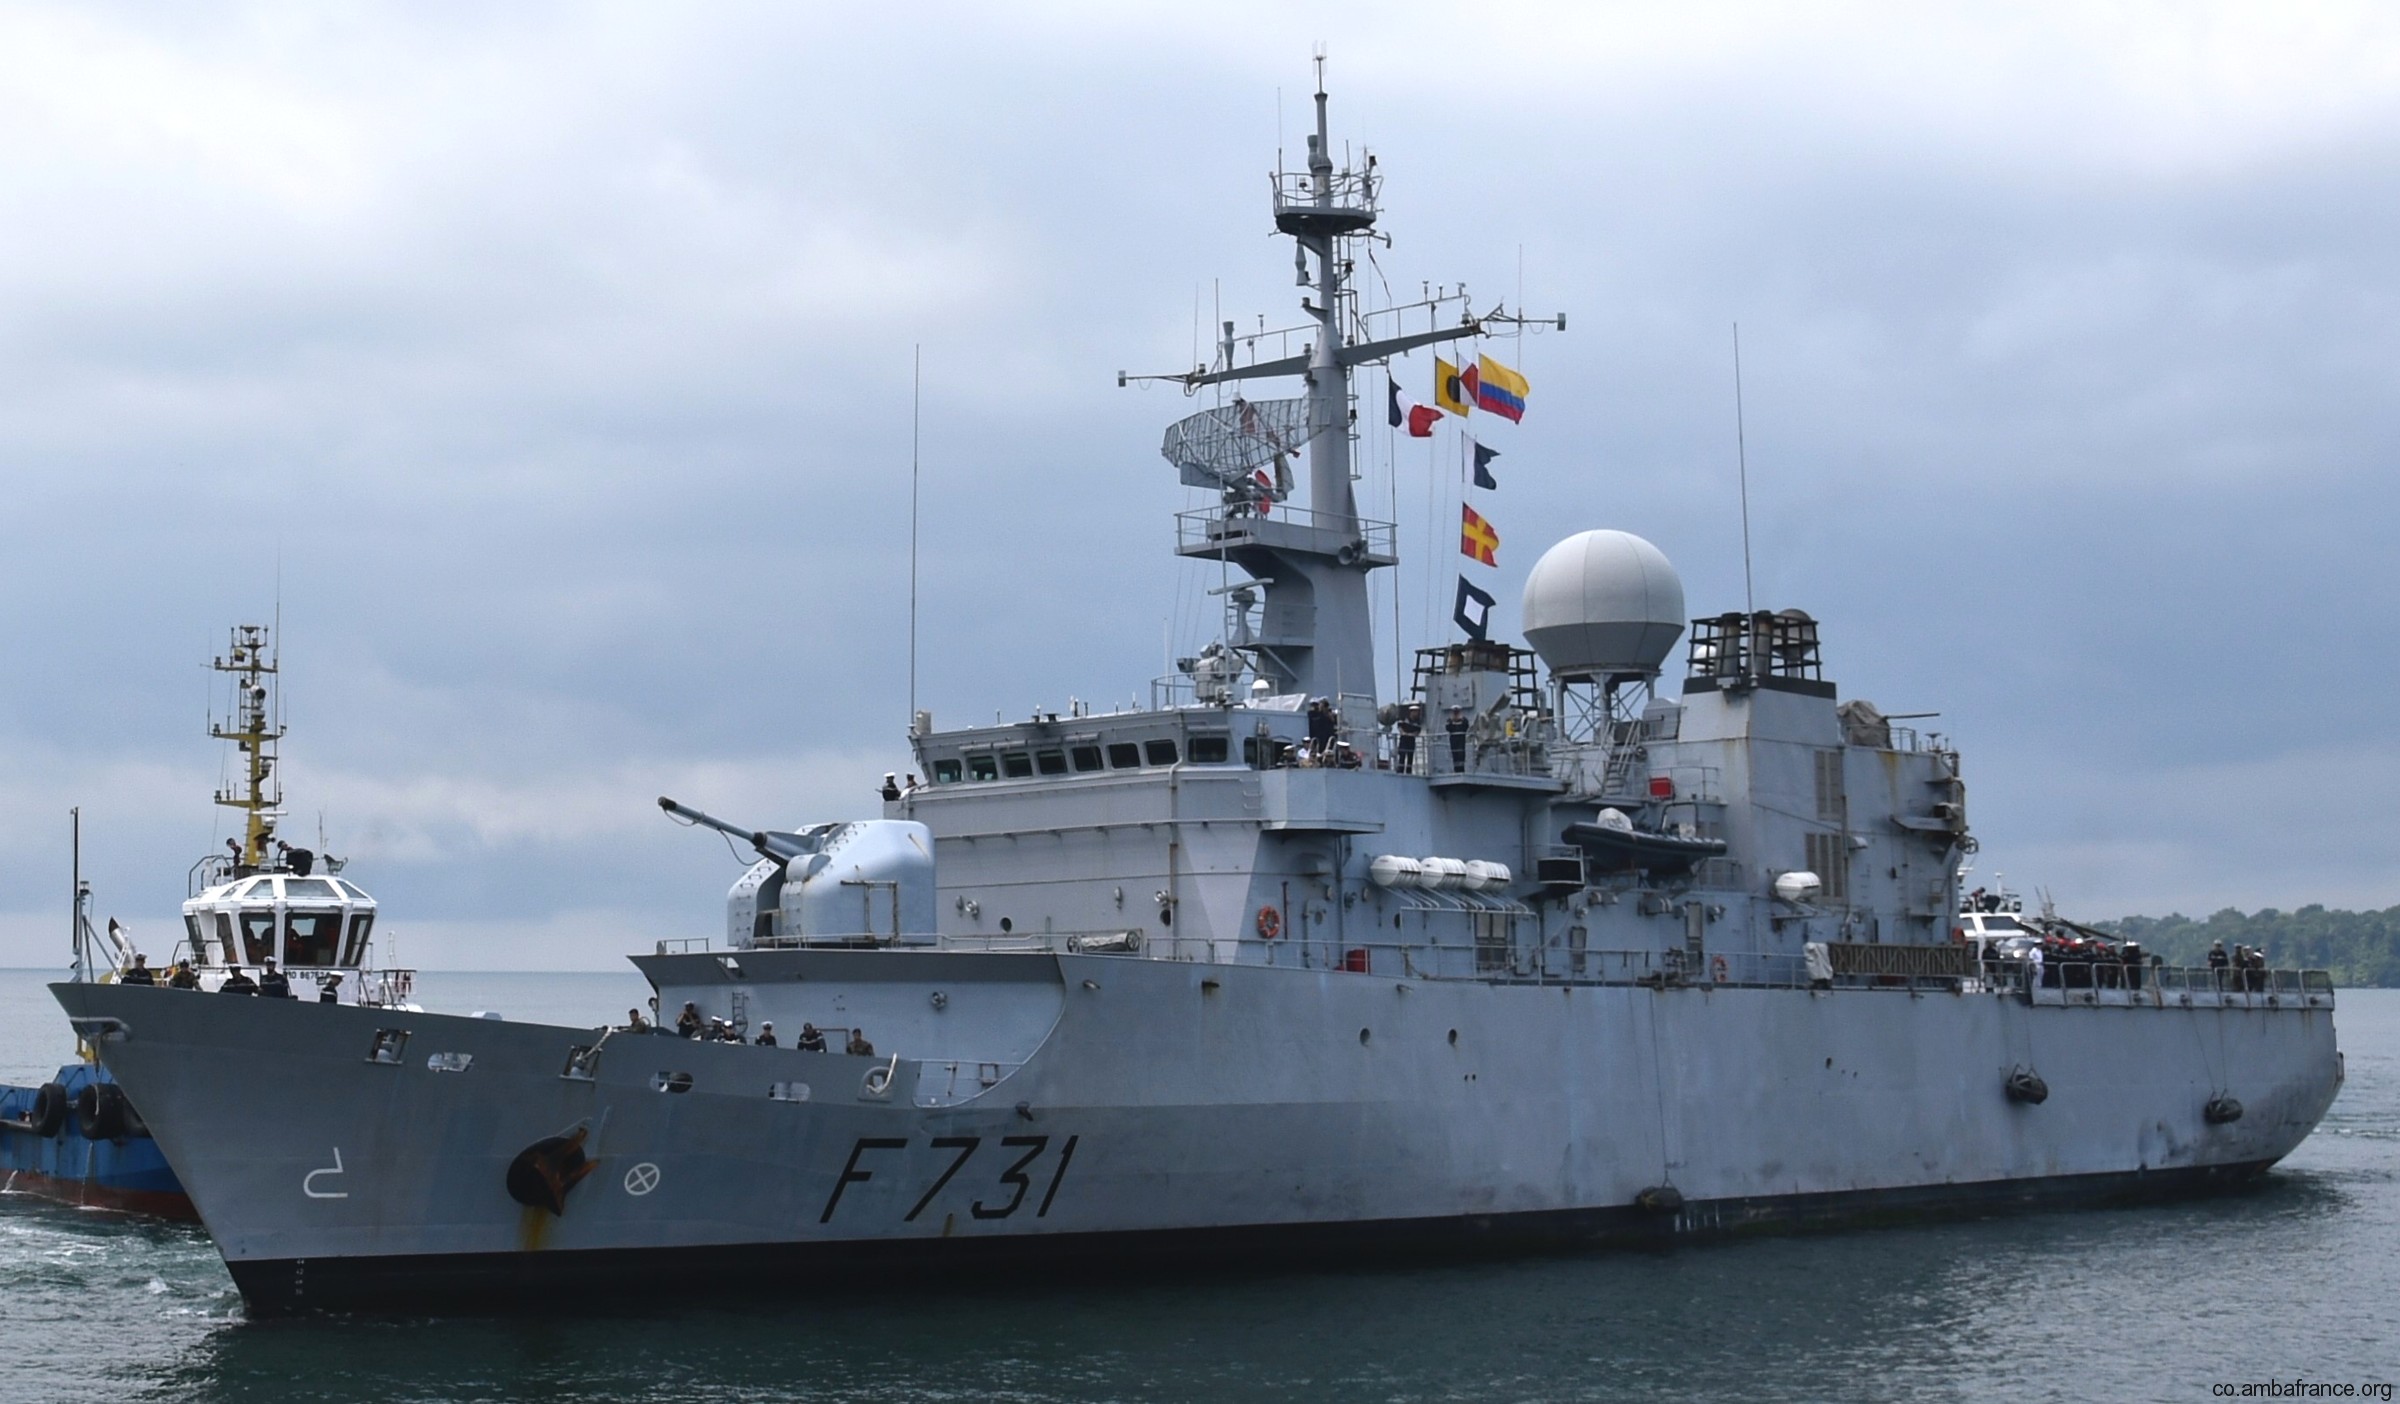 f-731 fs prairial floreal class frigate french navy marine nationale fregate surveillance 19